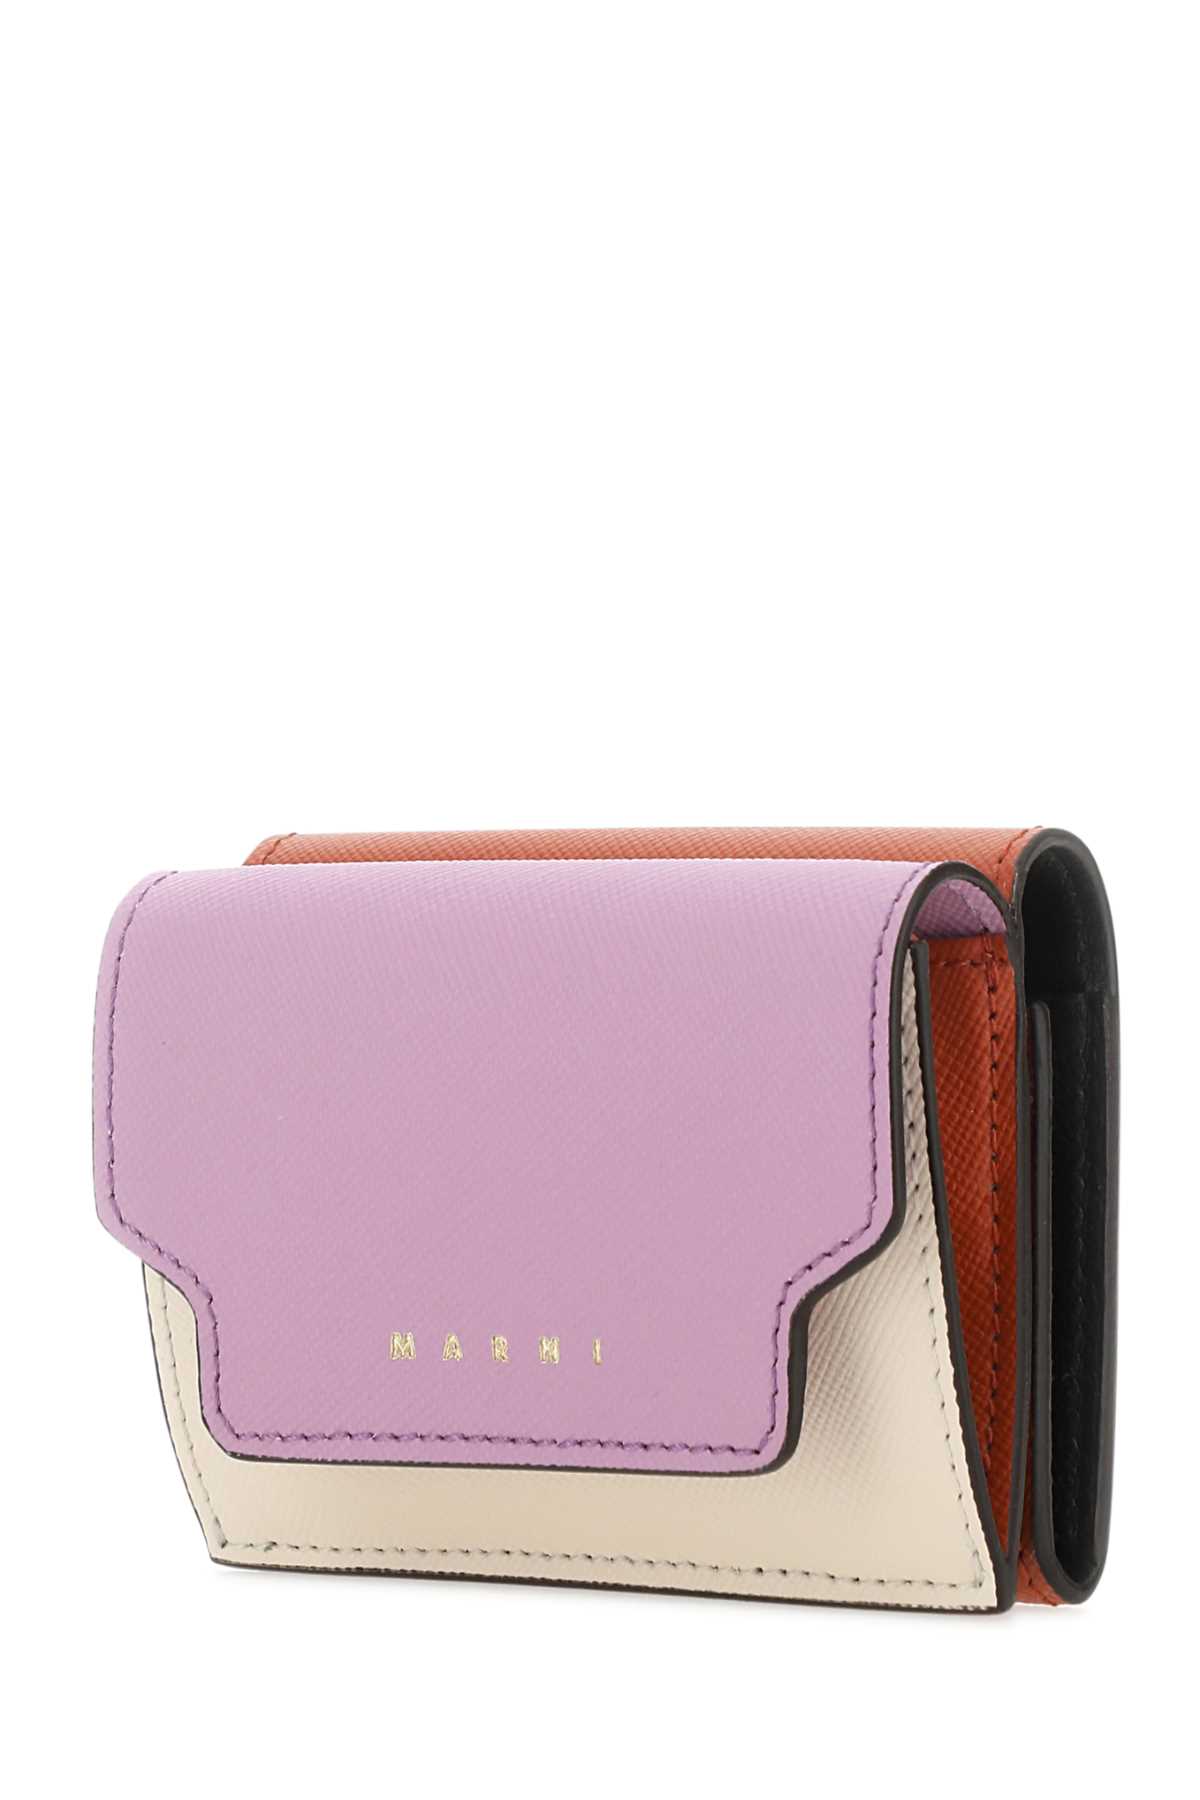 Marni Multicolor Leather Wallet In Talclightlilatabasco